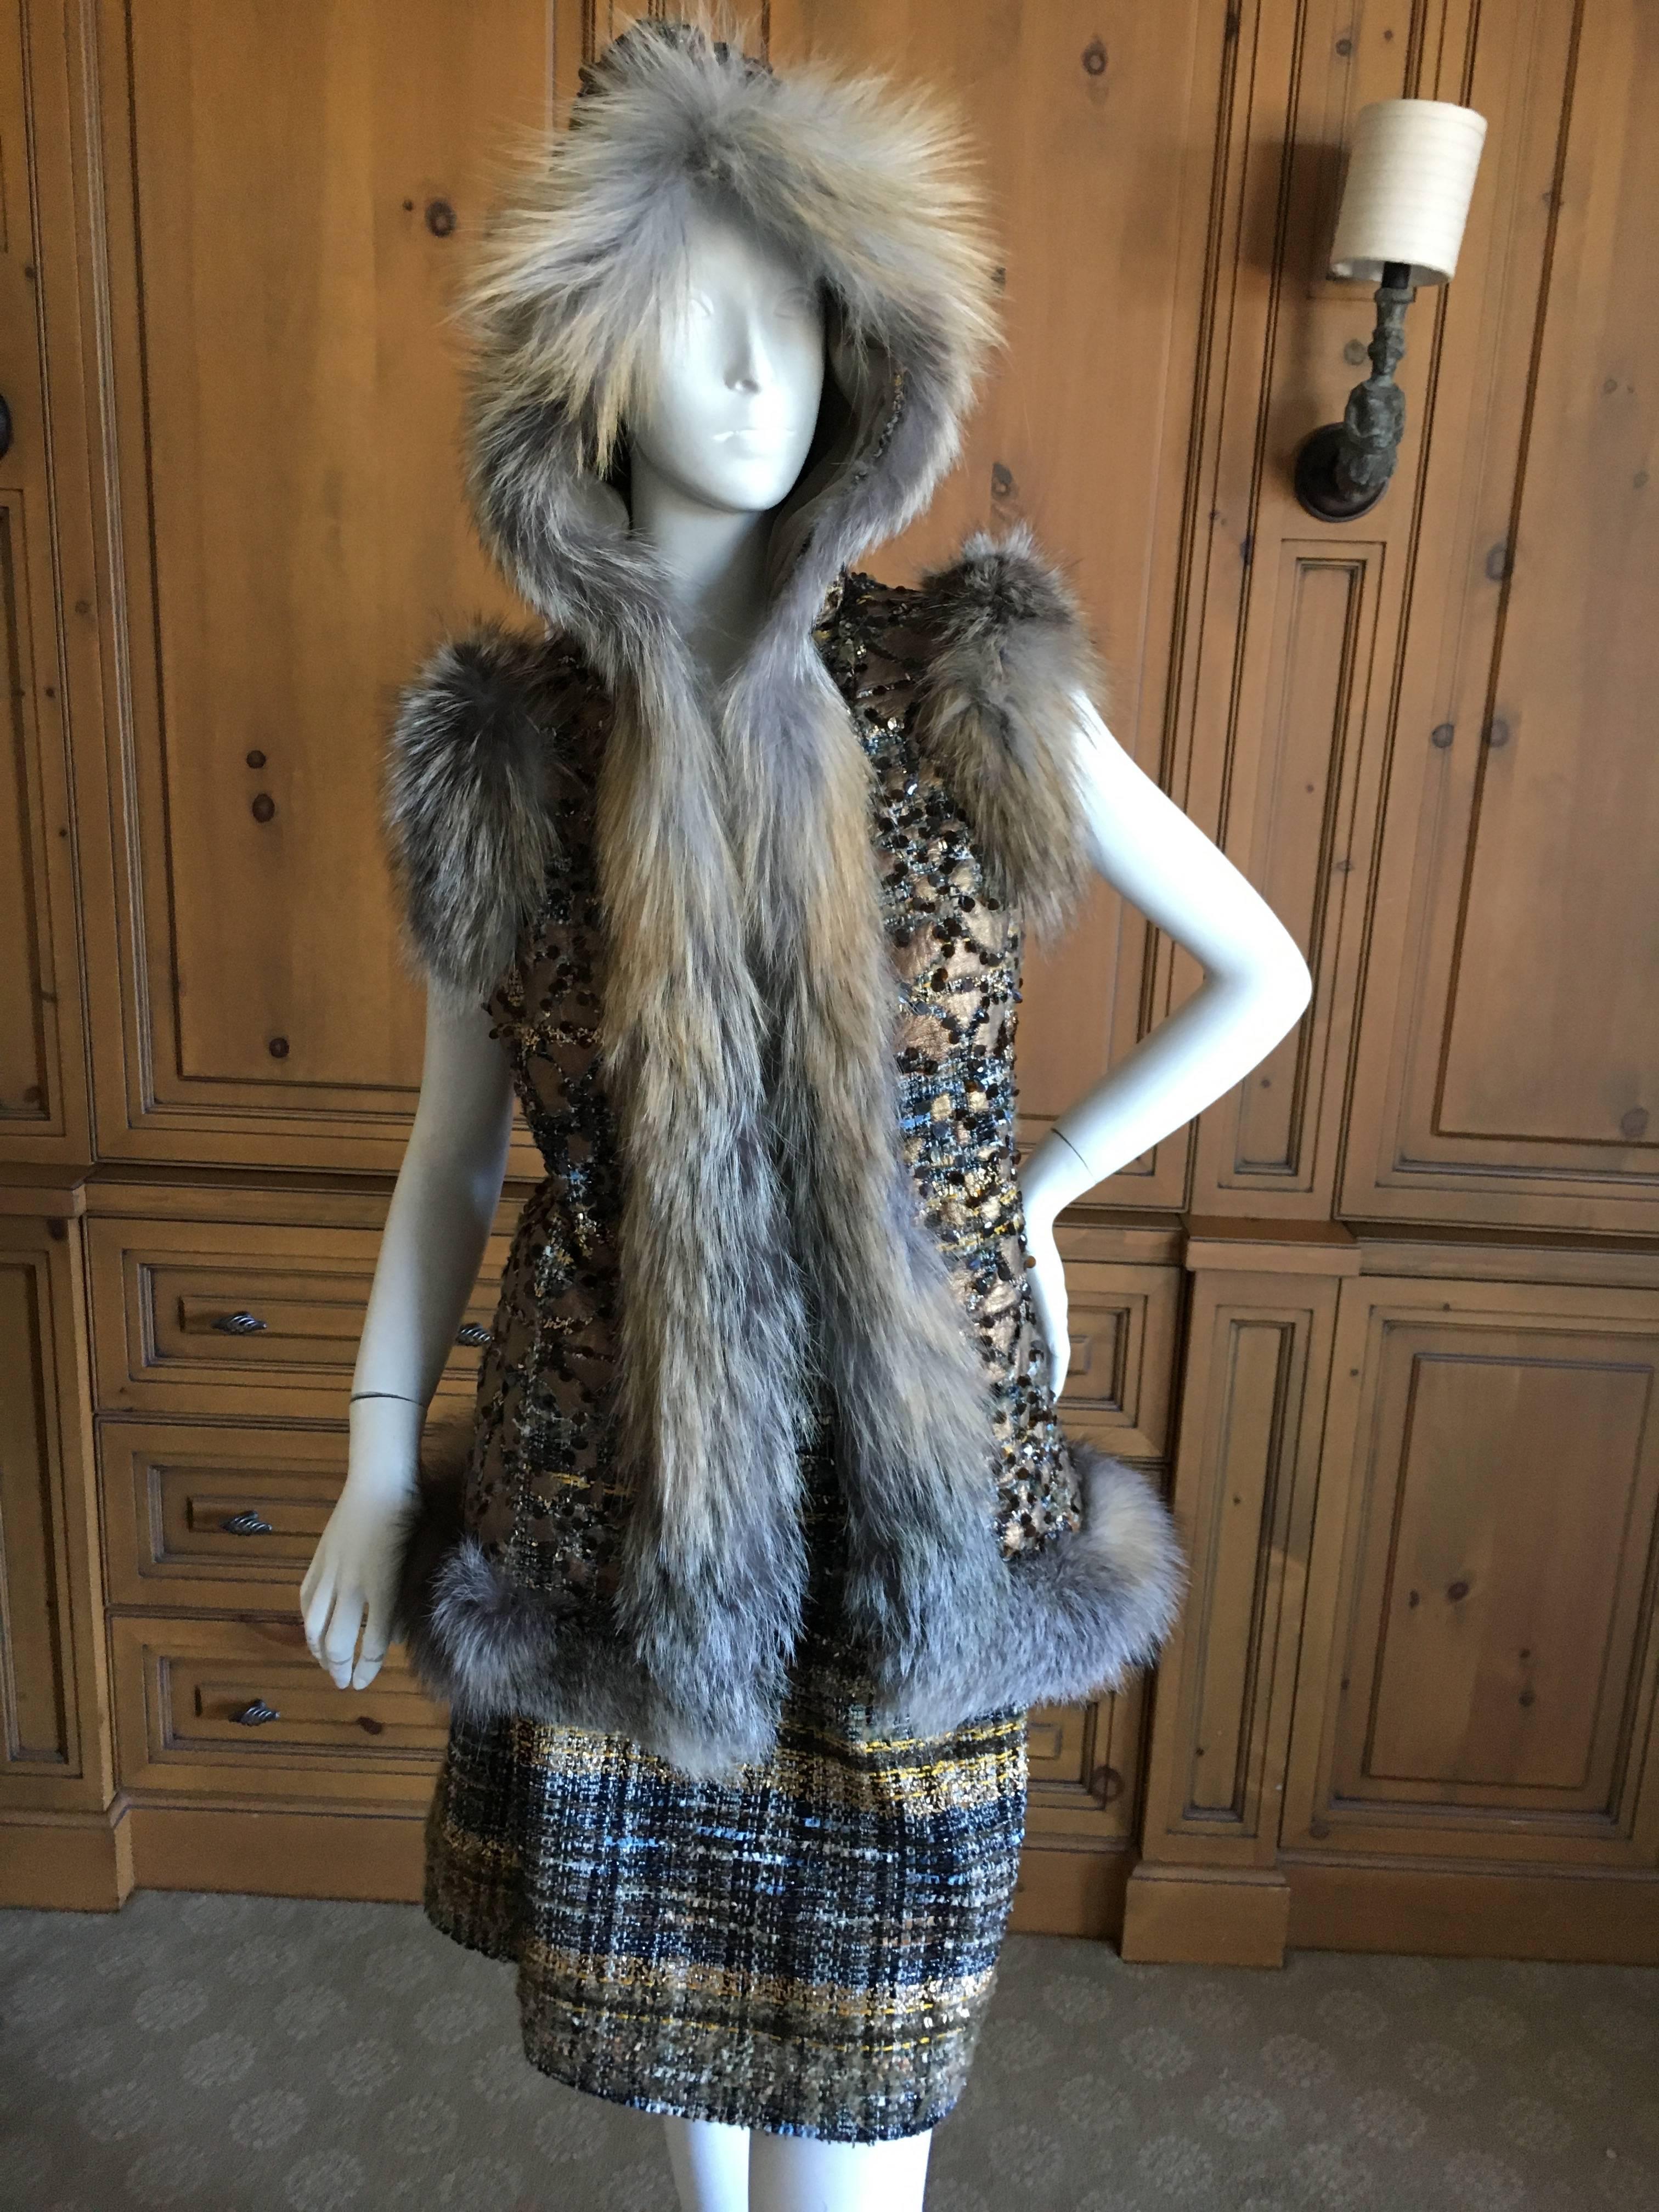 Exquisite Oscar de la Renta Fox Fur Trim Embellished Vest with Hood.
Comes with matching skirt.
Fall 2012
Size 0
Bust 36"
Waist 32"
Length 26"
Skirt 
Waist 26" 
HIps 42"
Length 19"
Excellent condition.